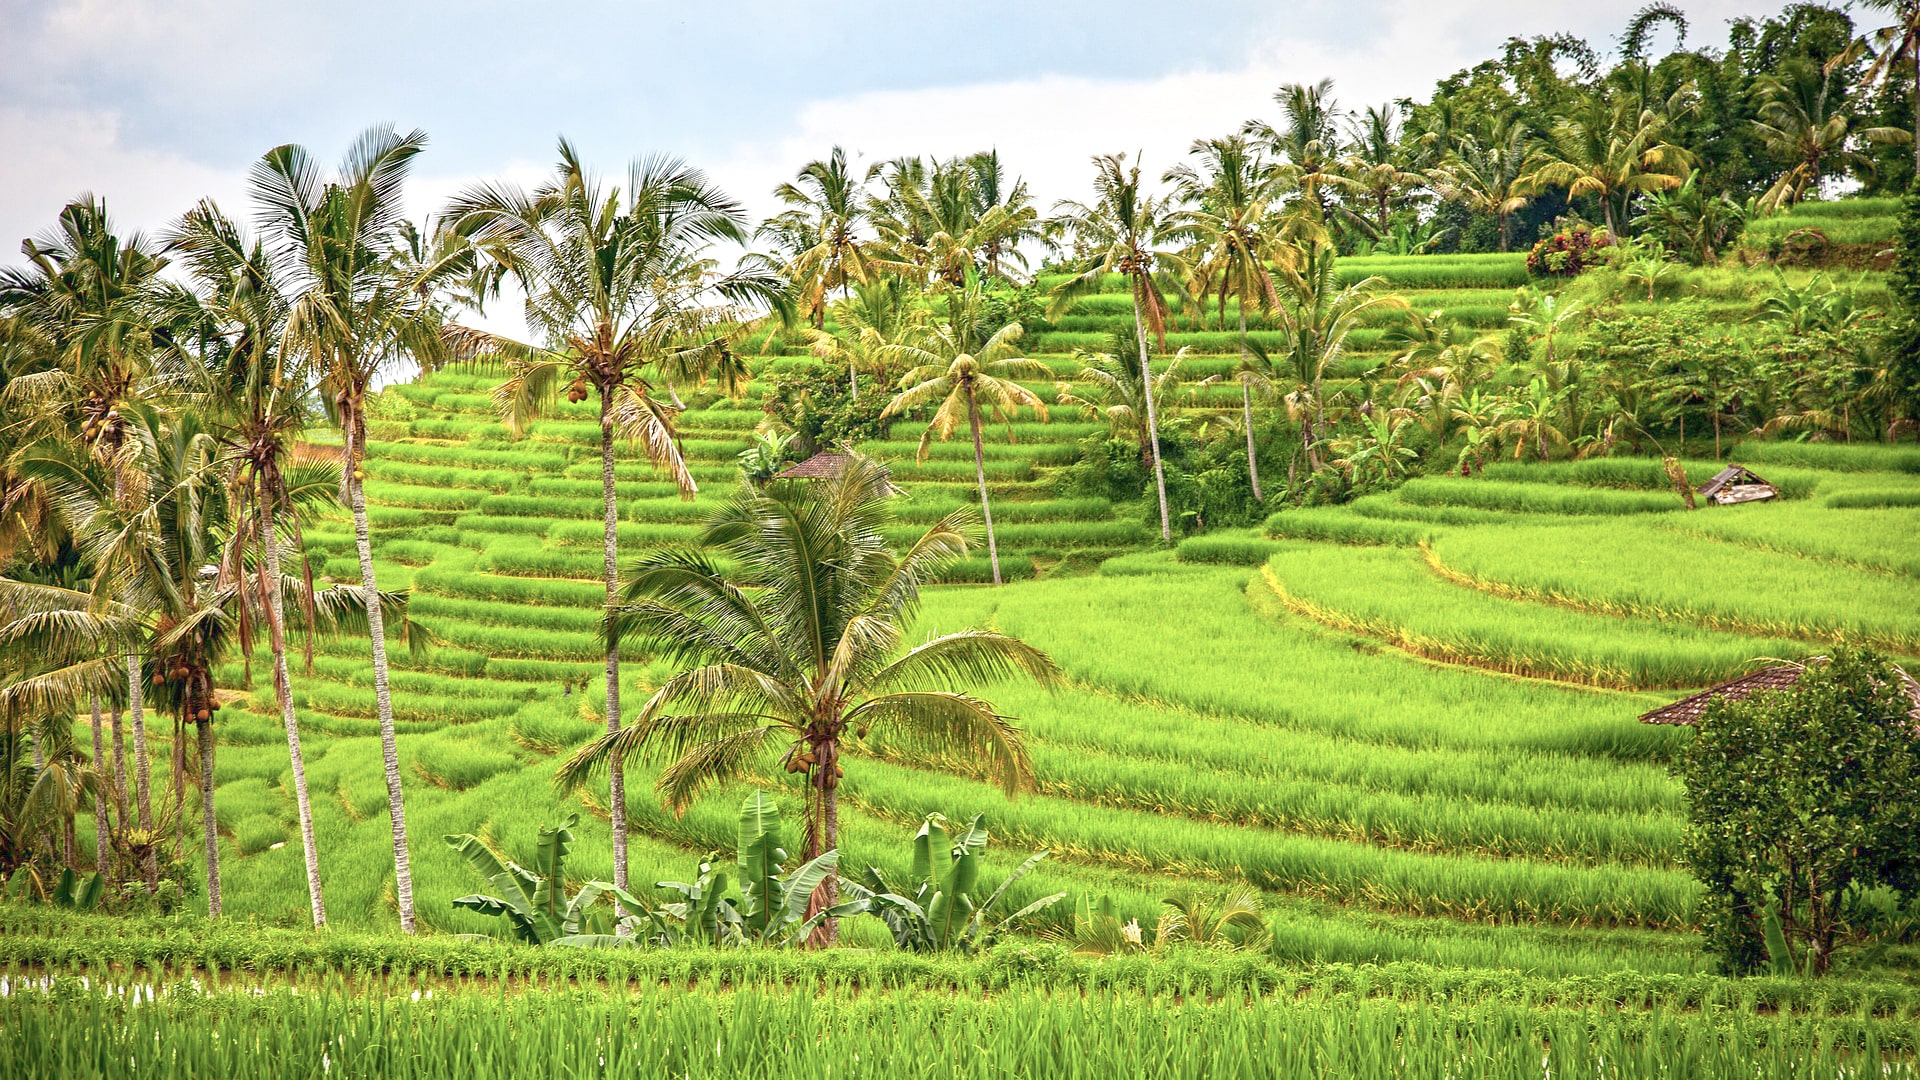 Jatiluwih rice terraces in Bali